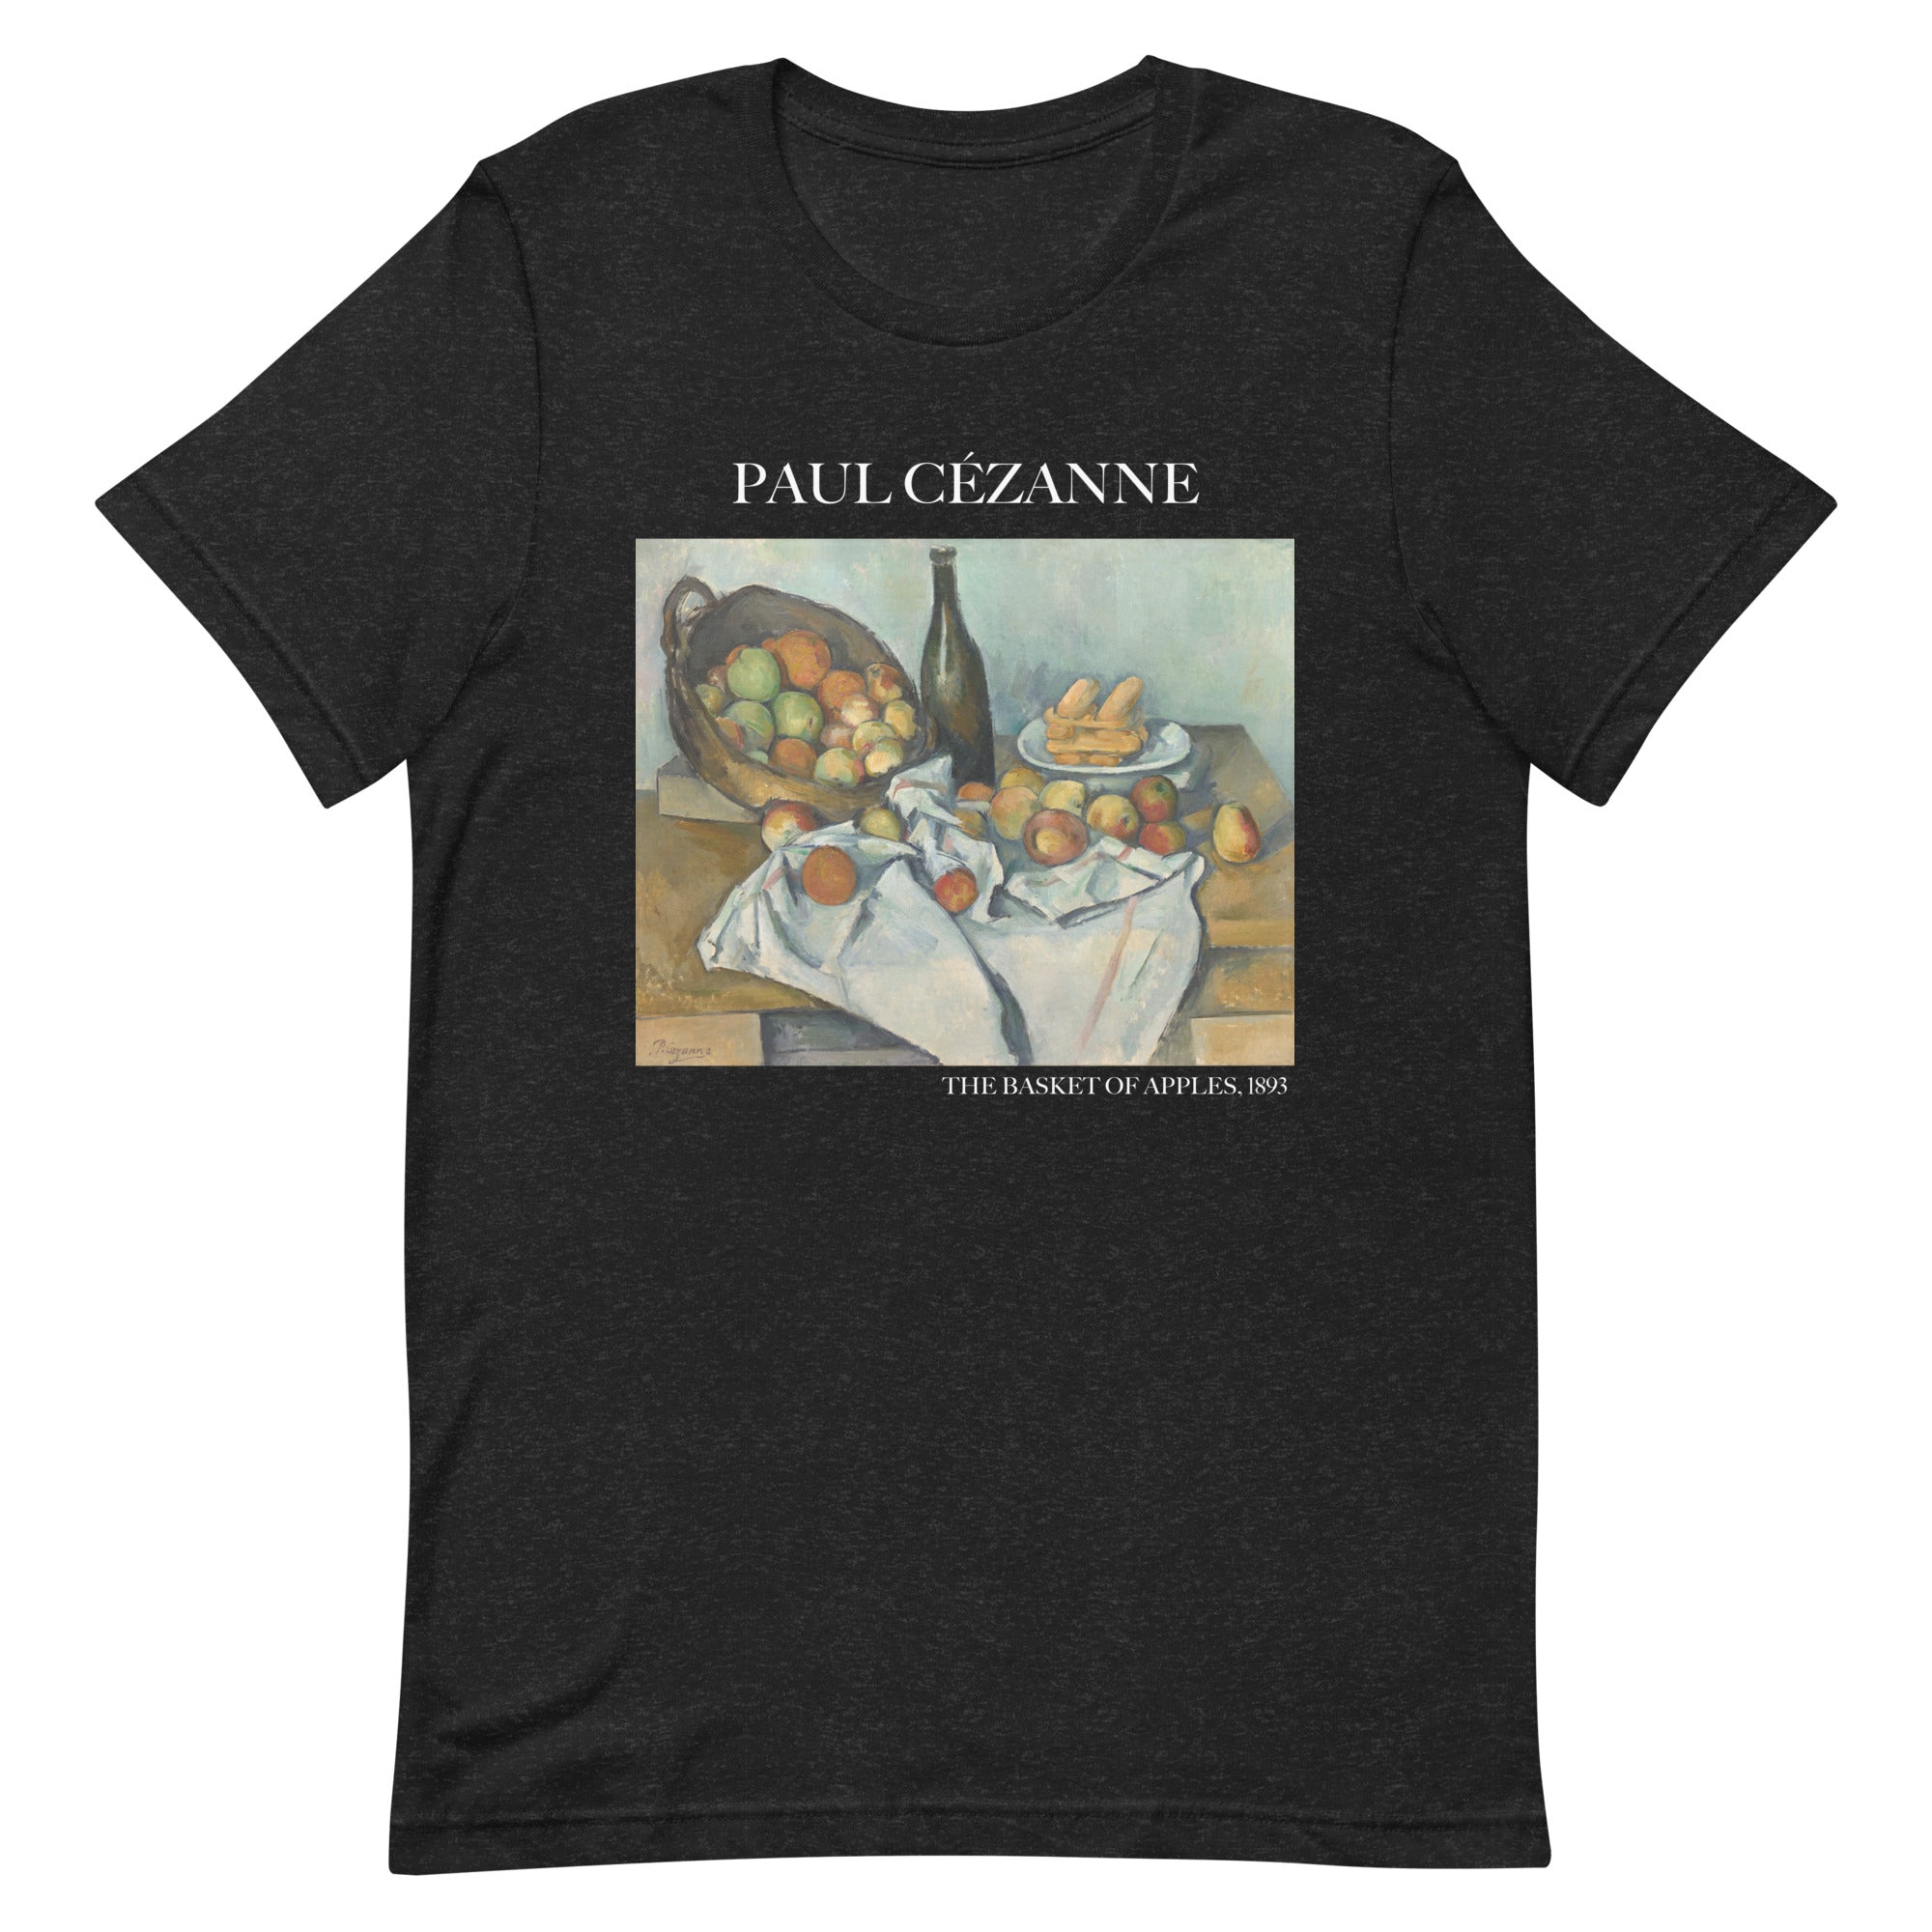 Paul Cézanne 'The Basket of Apples' Famous Painting T-Shirt | Unisex Classic Art Tee